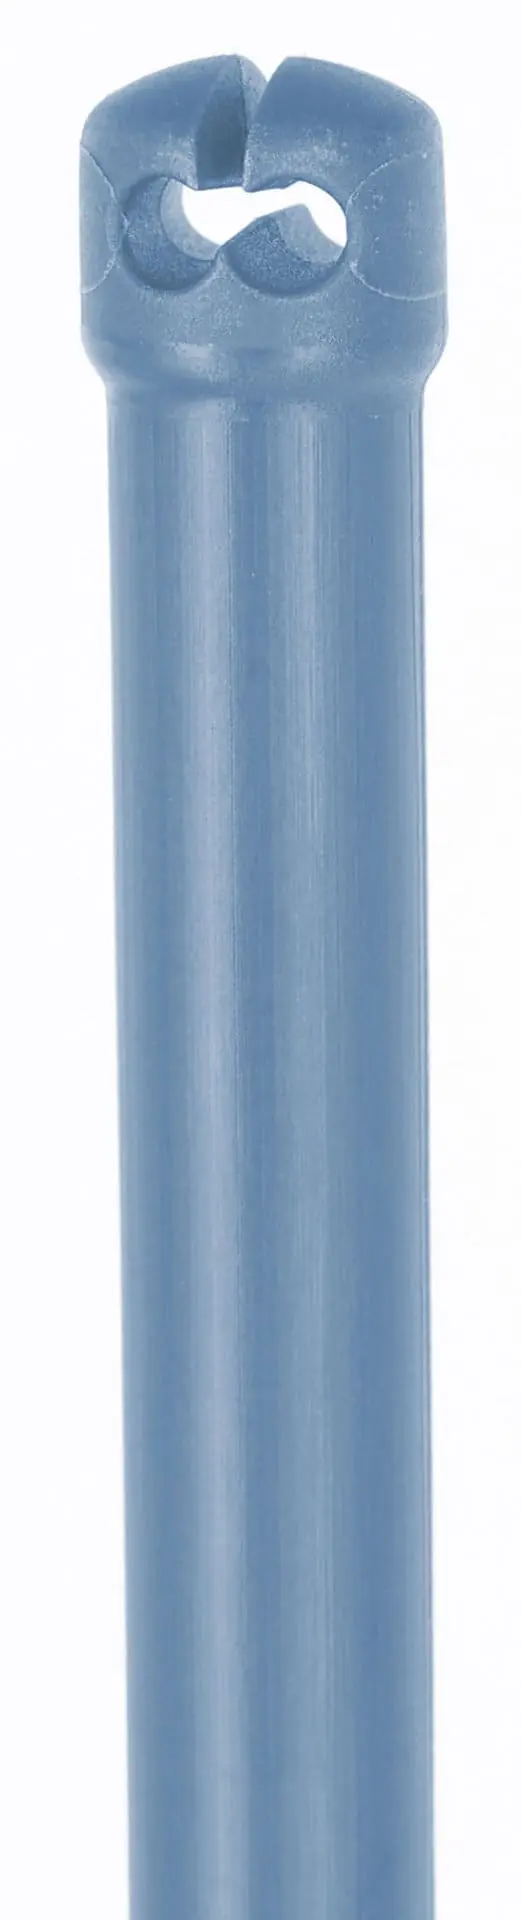 Premium Ersatzpfahl blau 122cm  Doppelspitze